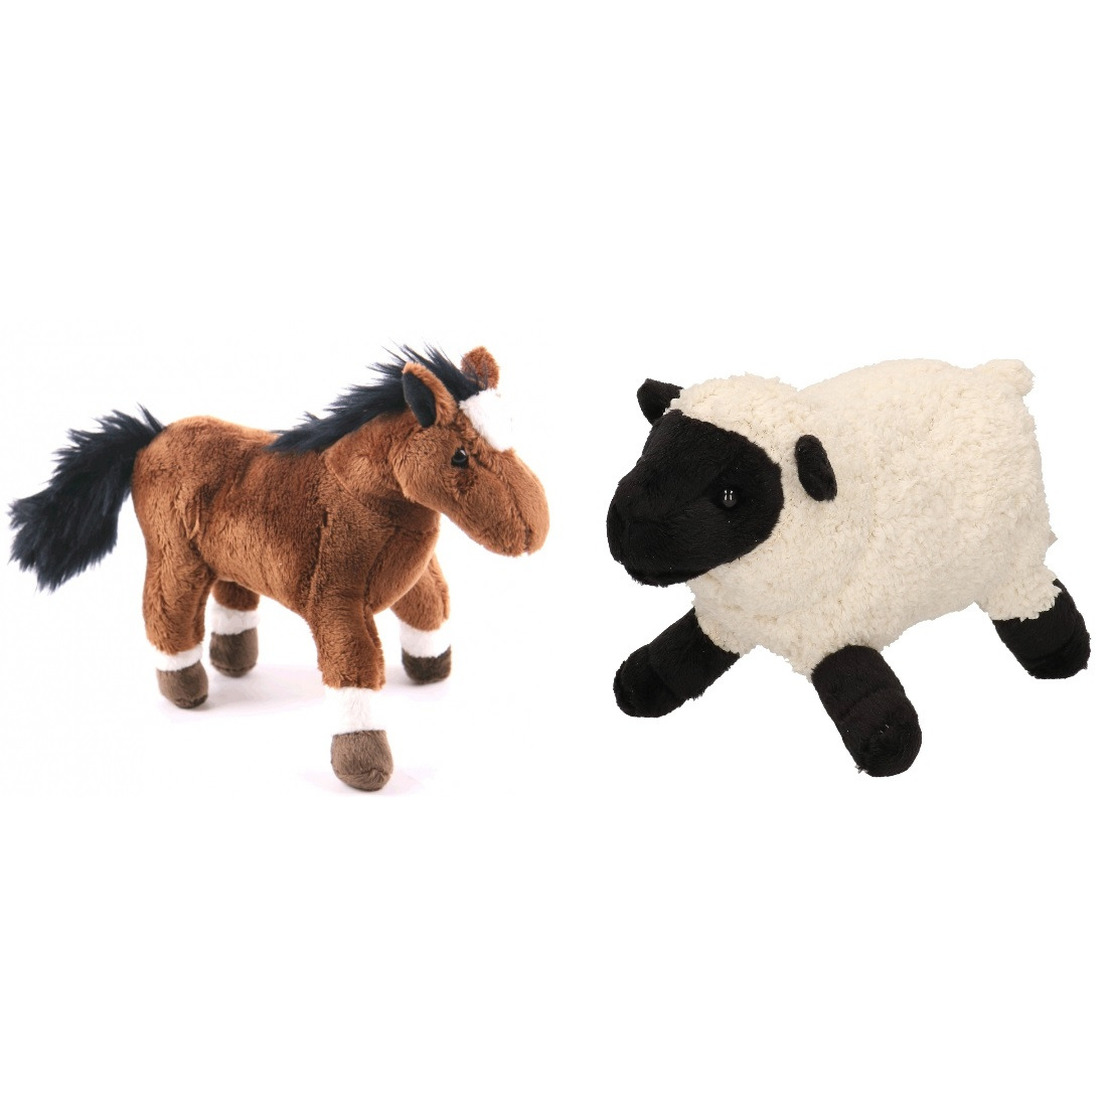 Pluche knuffel boerderijdieren set Schaap-lammetje en Paard van 20 cm